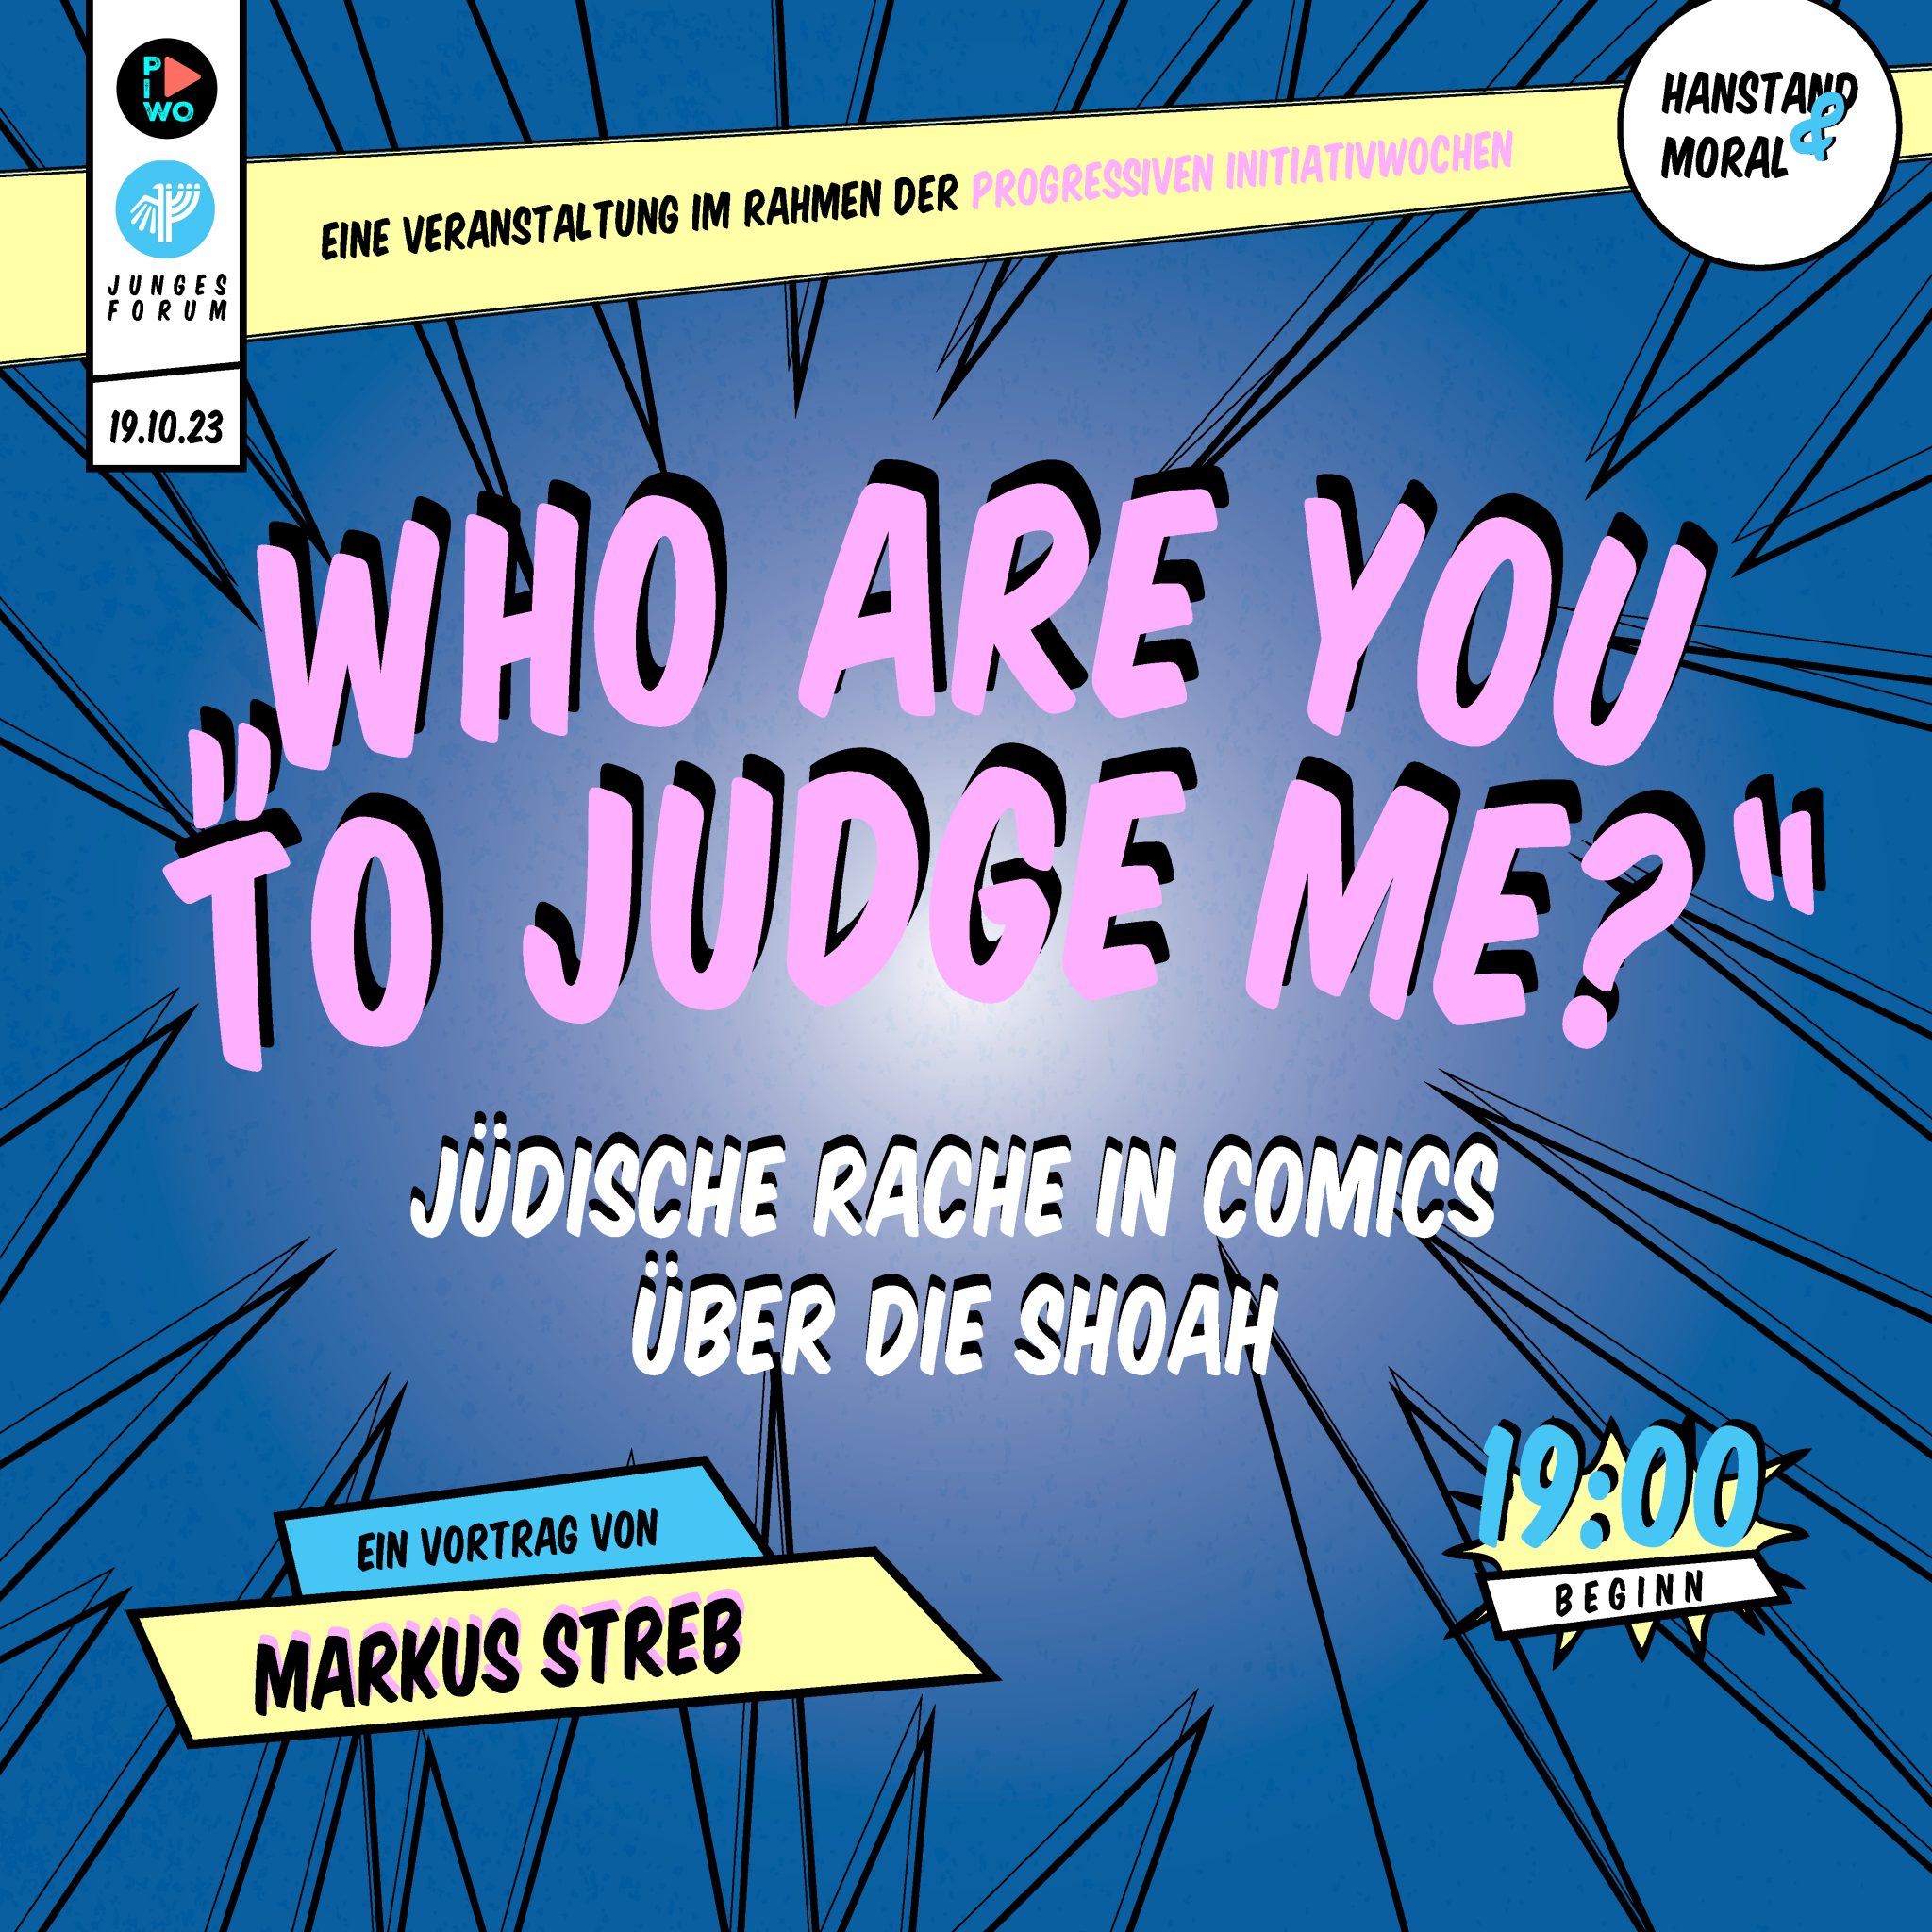 "Who are you to judge me?" Jüdische Rache in Comics nach der Shoah